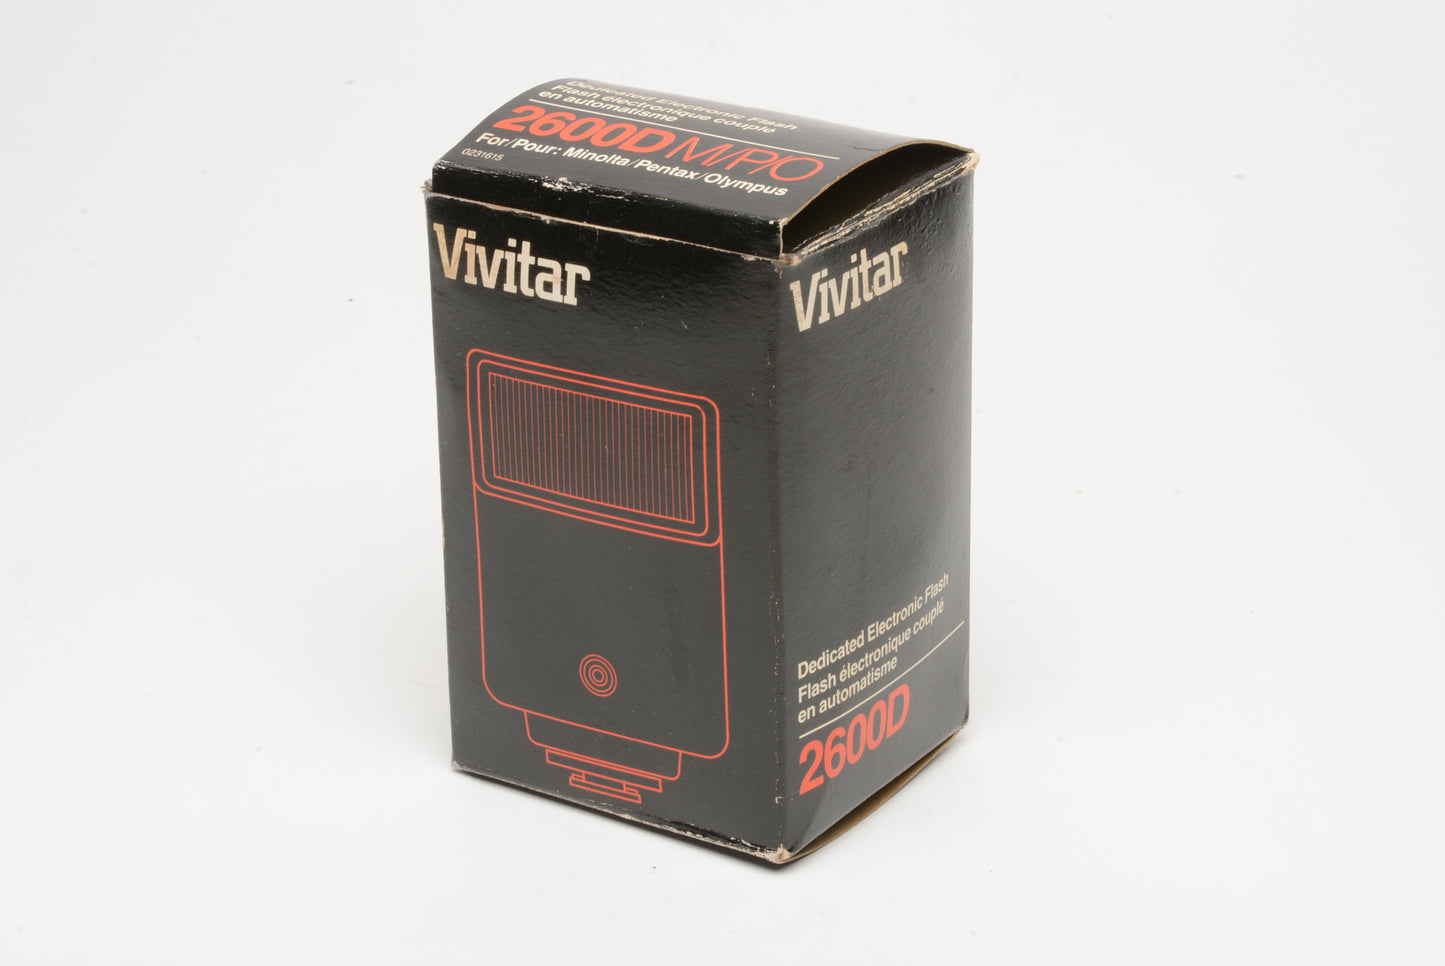 Vivitar 2600D MPO Flash, boxed (dedicated for Minolta, Pentax, Olympus)